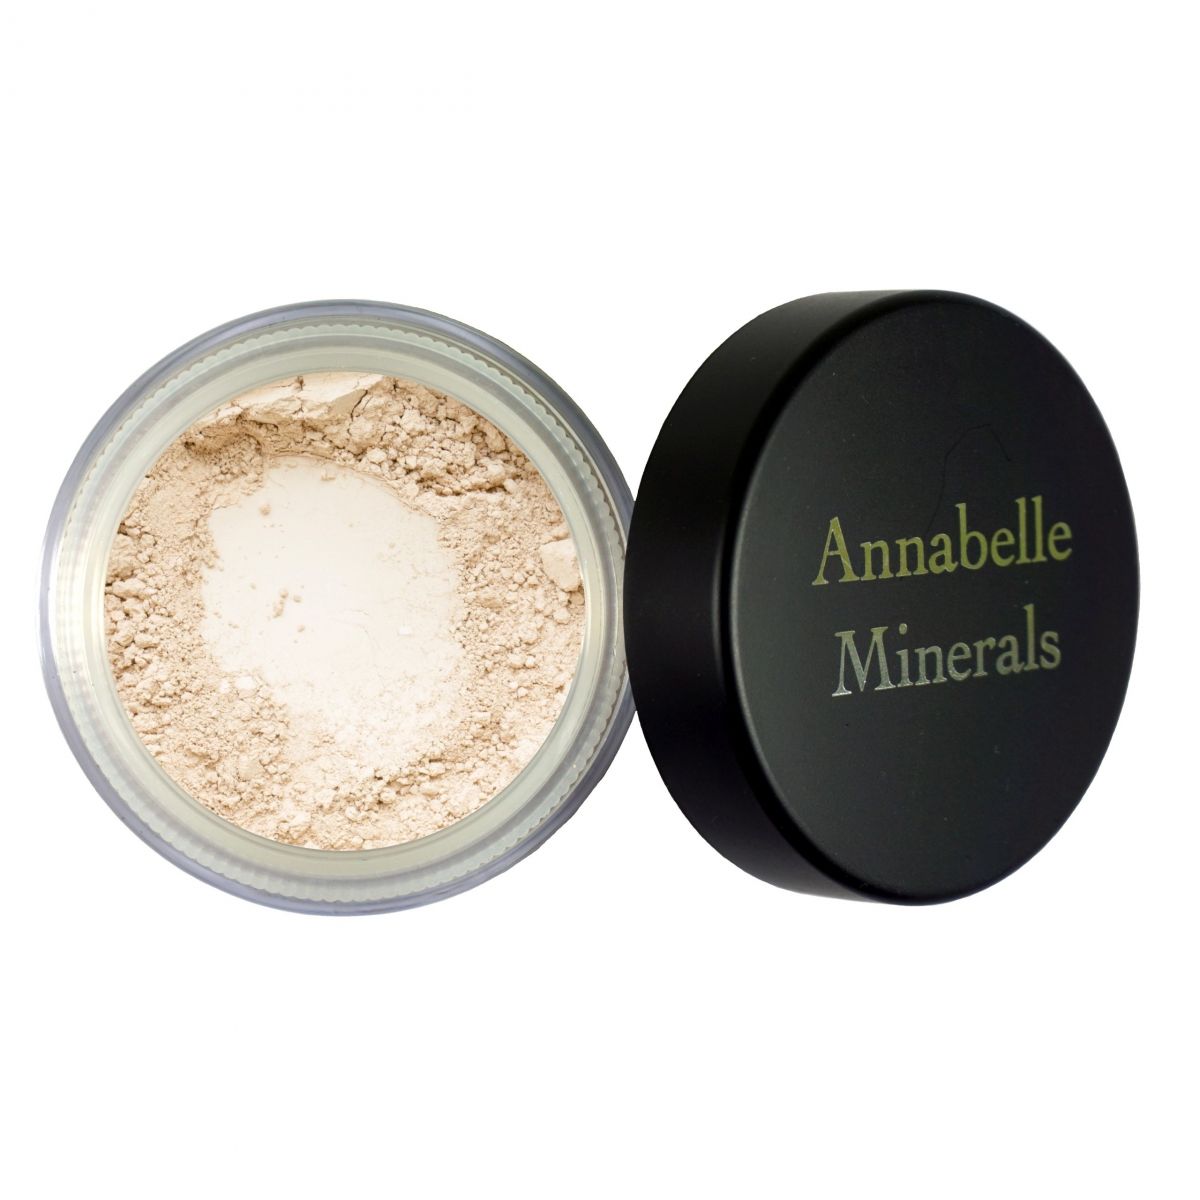 Annabelle Minerals Podkład mineralny - kryjący Natural Light - 4g